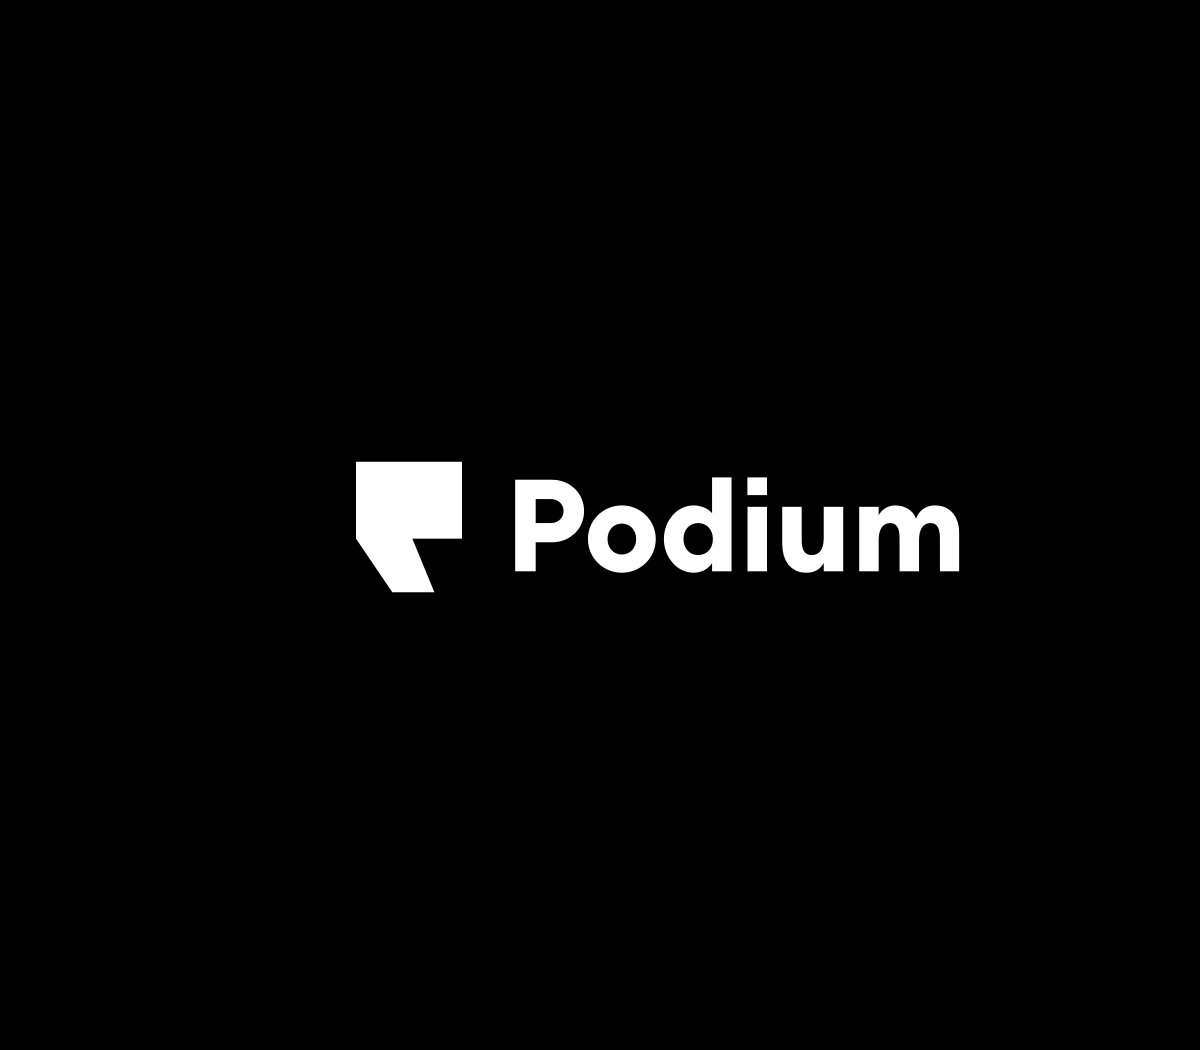 Introducing the new Podium logo